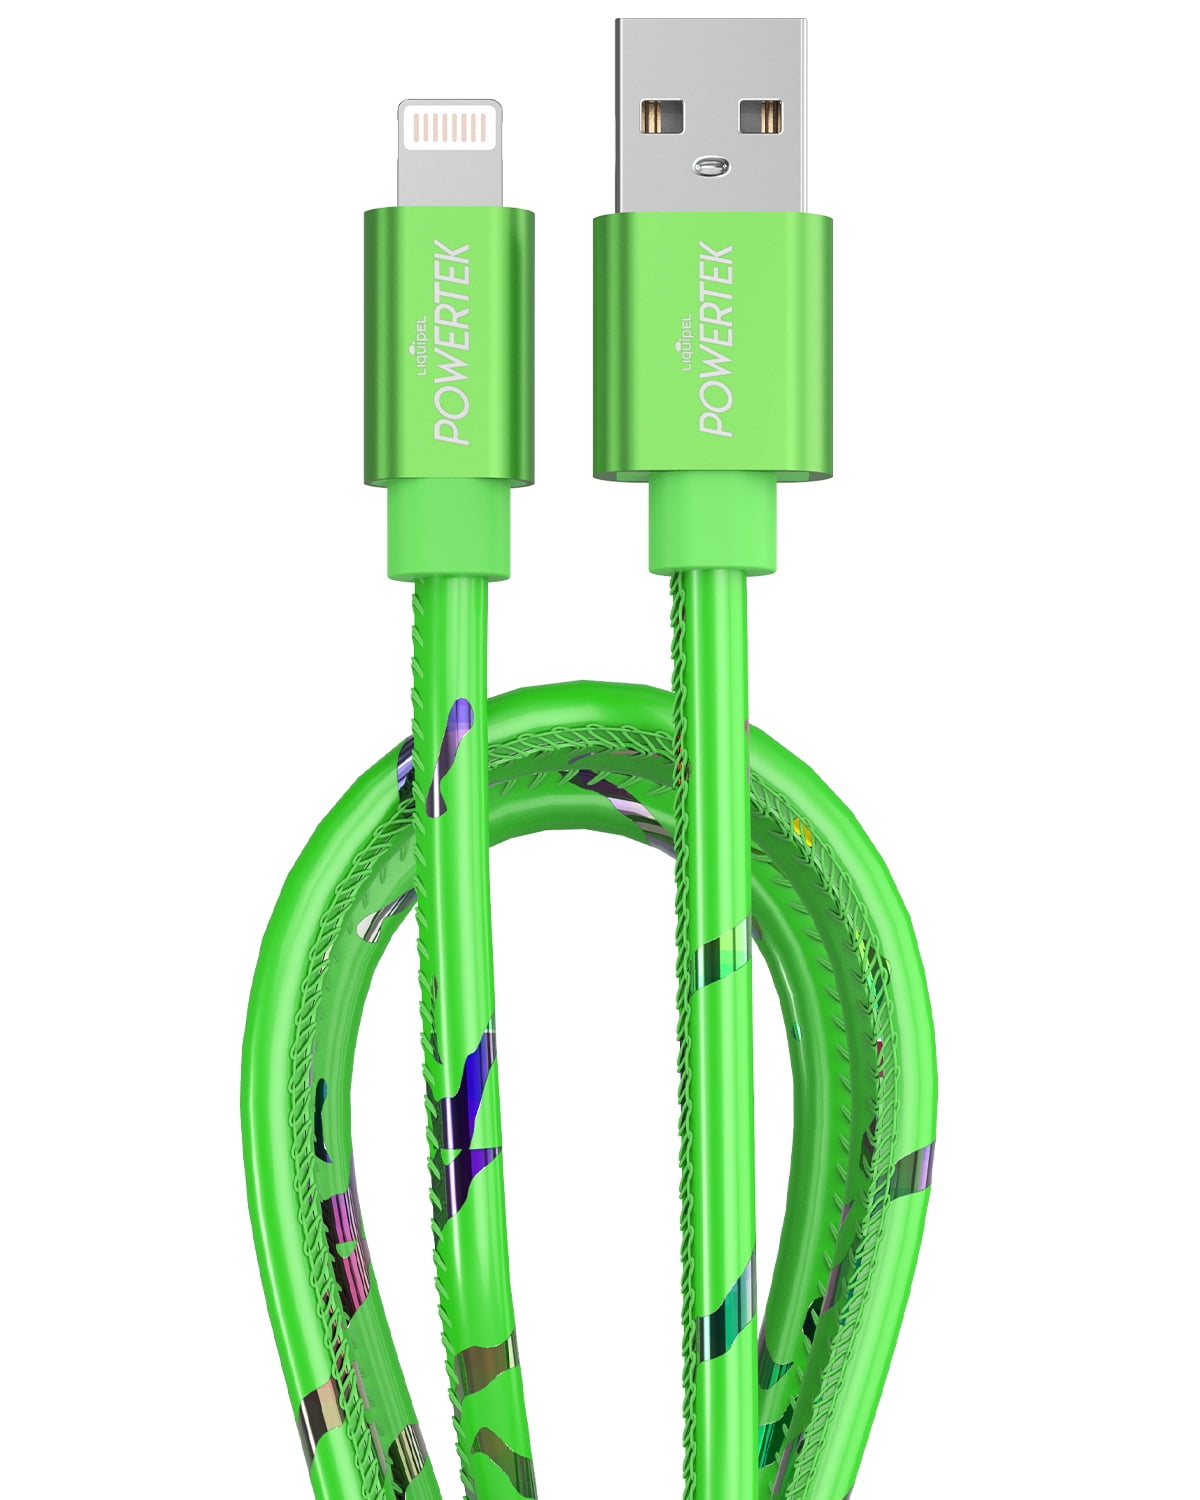 Liquipel Powertek iPad & iPhone Lightning Charger Cable, Fast